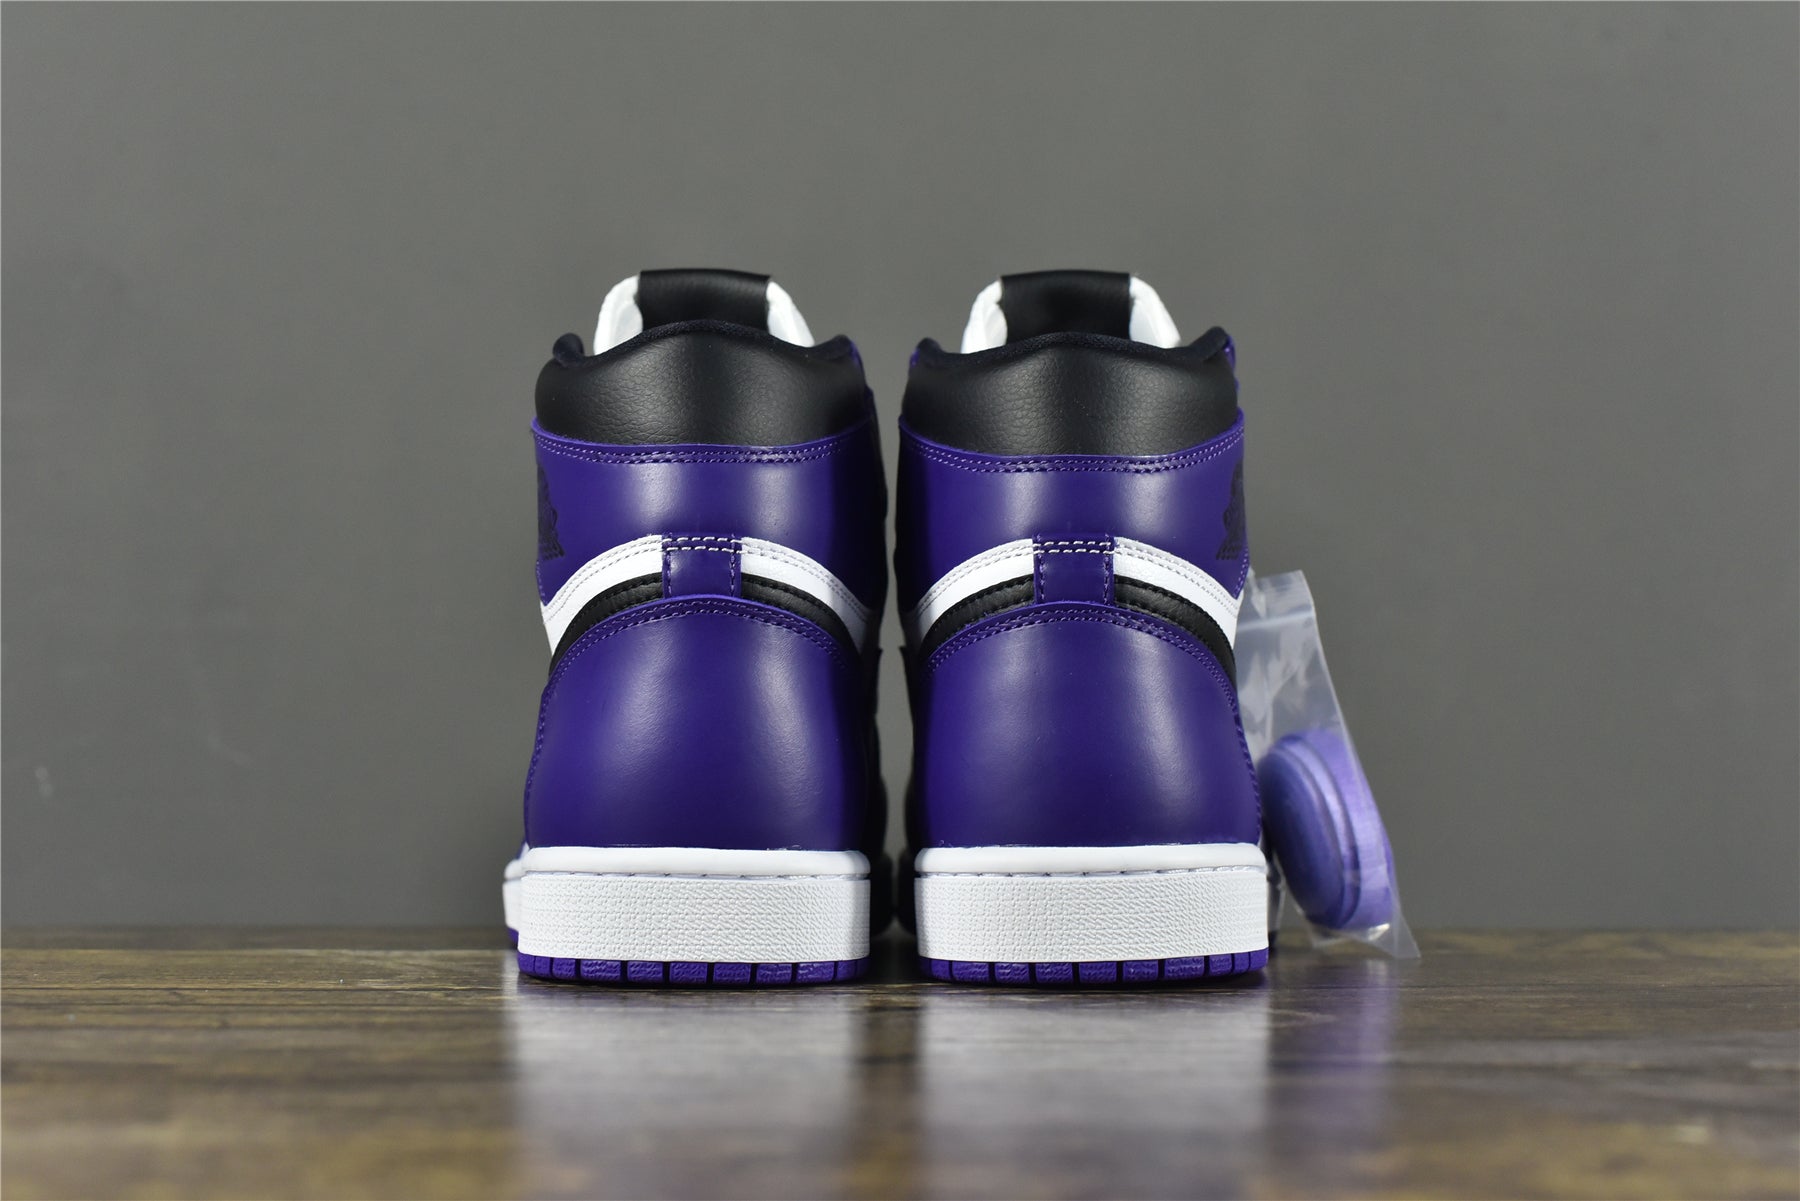 Air Jordan 1 High 'Court Purple 2.0'